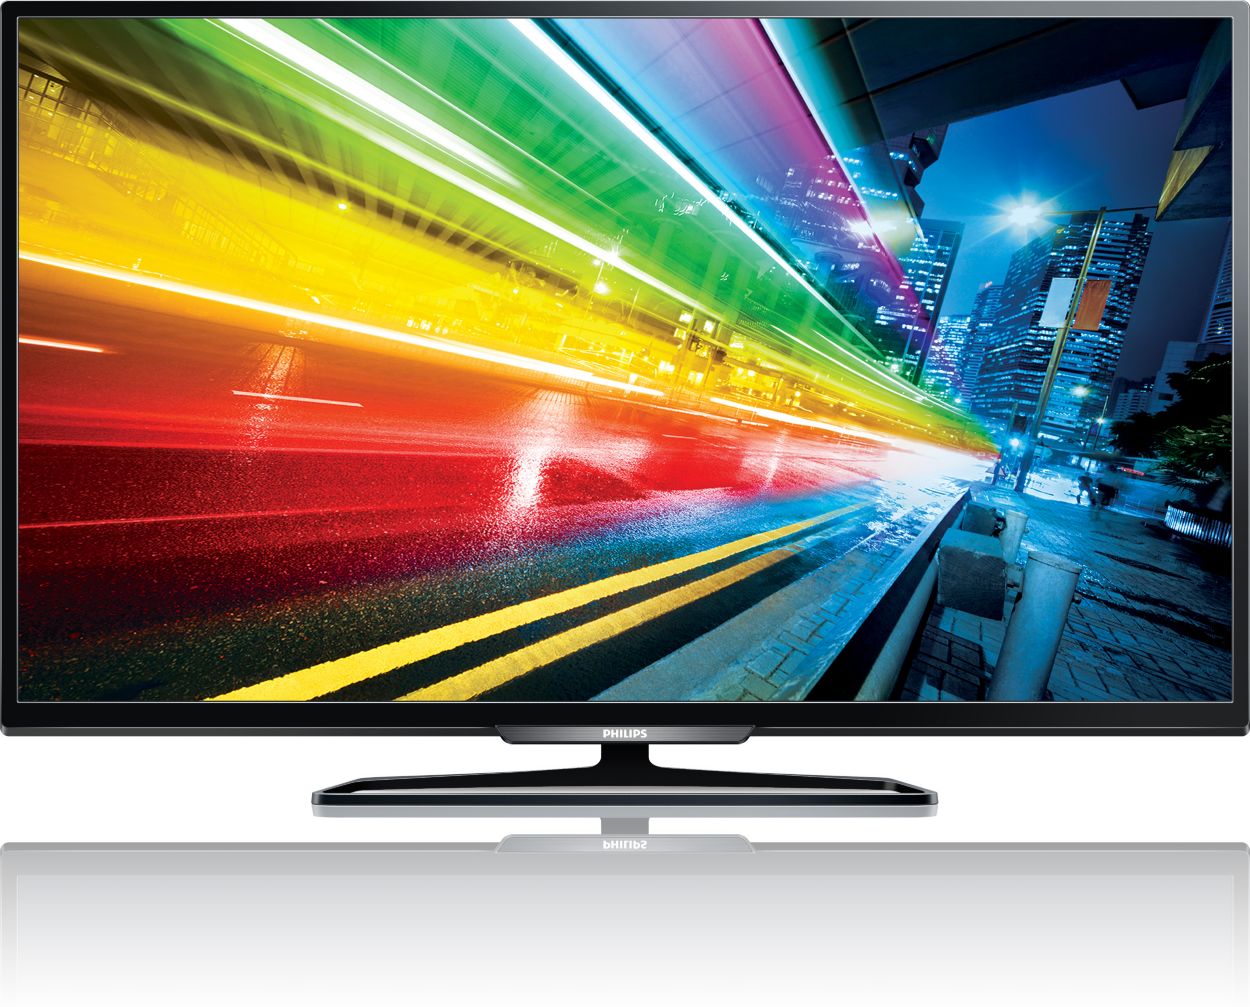 TV LED portátil de 16 pulgadas, TV digital ATSC de 1080p, sintonizador  digital HDMI USB de pantalla ancha, entrada/salida AV, monitor de pantalla,  TV